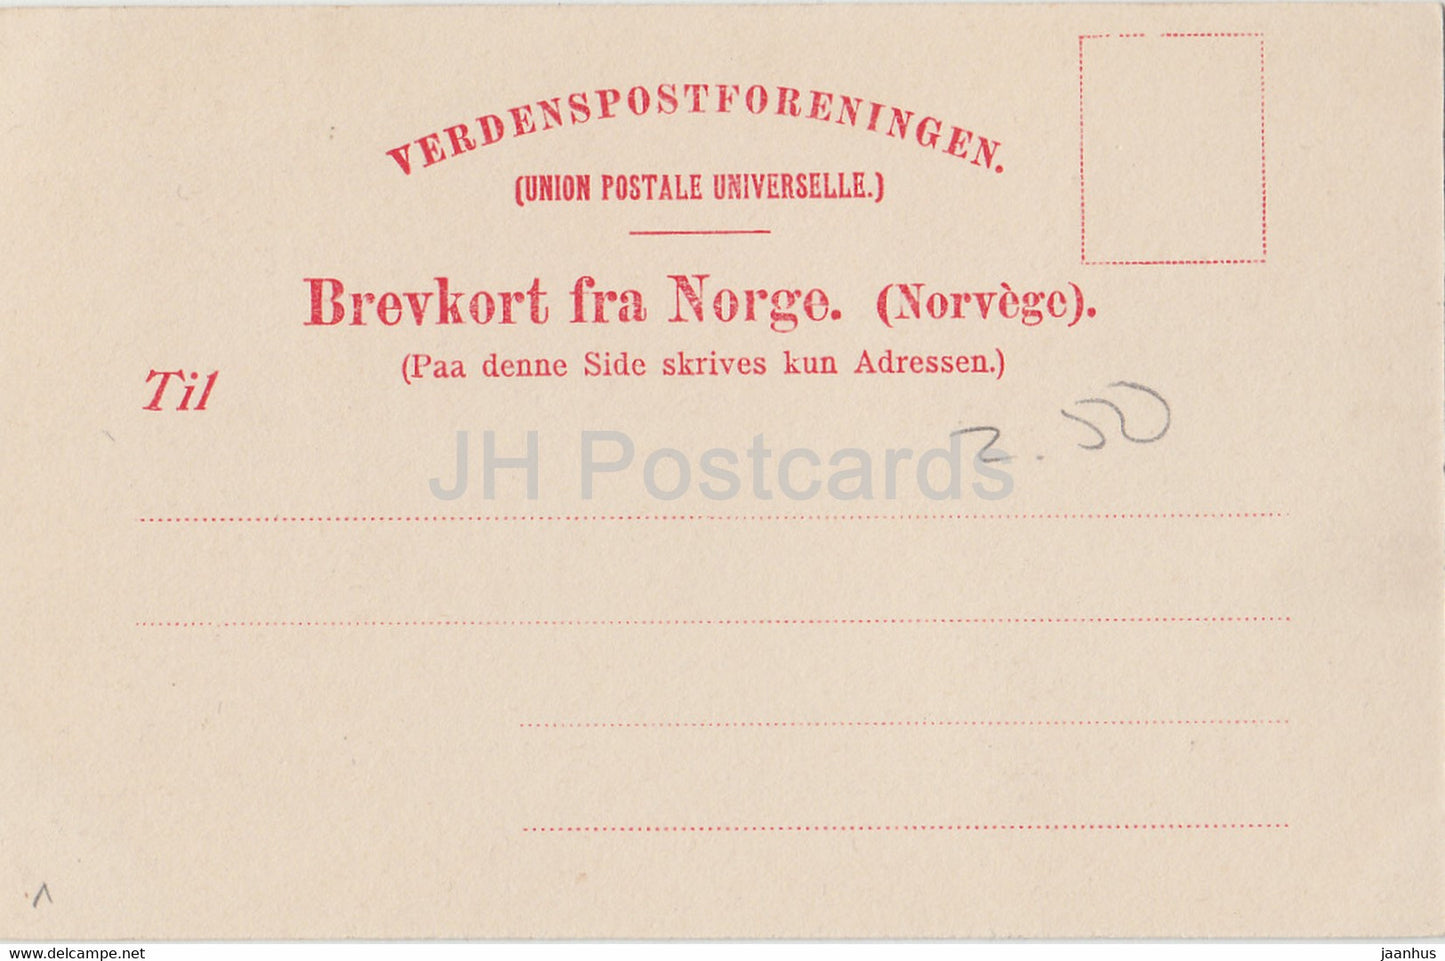 Geiranger - De 7 Sostre  - 399 - old postcard - Norway - unused